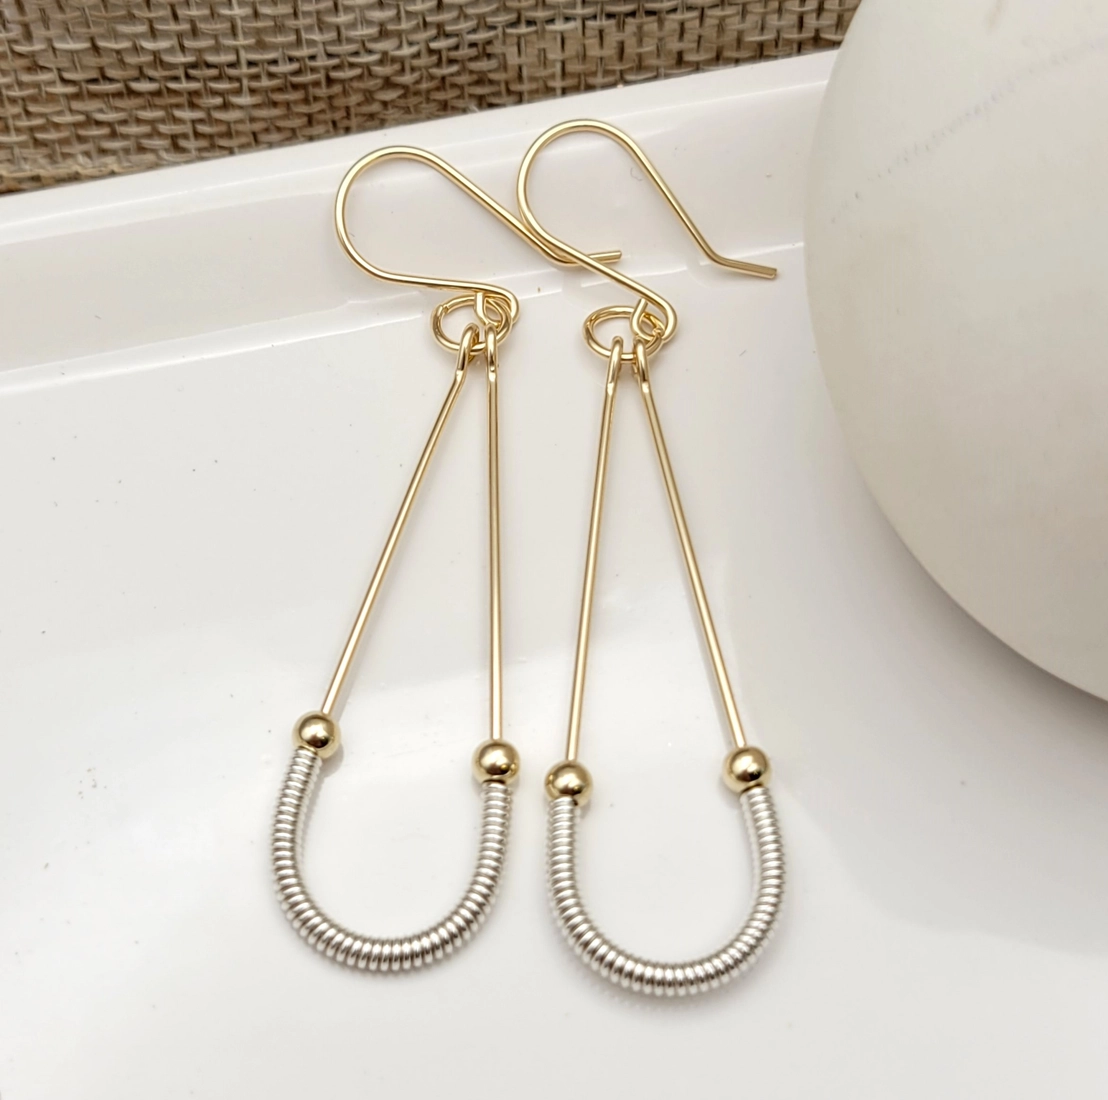 Modern Gold and Silver Coil Hoop Earrings-Earrings-Bijou by Sam-Stella Violet Boutique in Arvada, Colorado